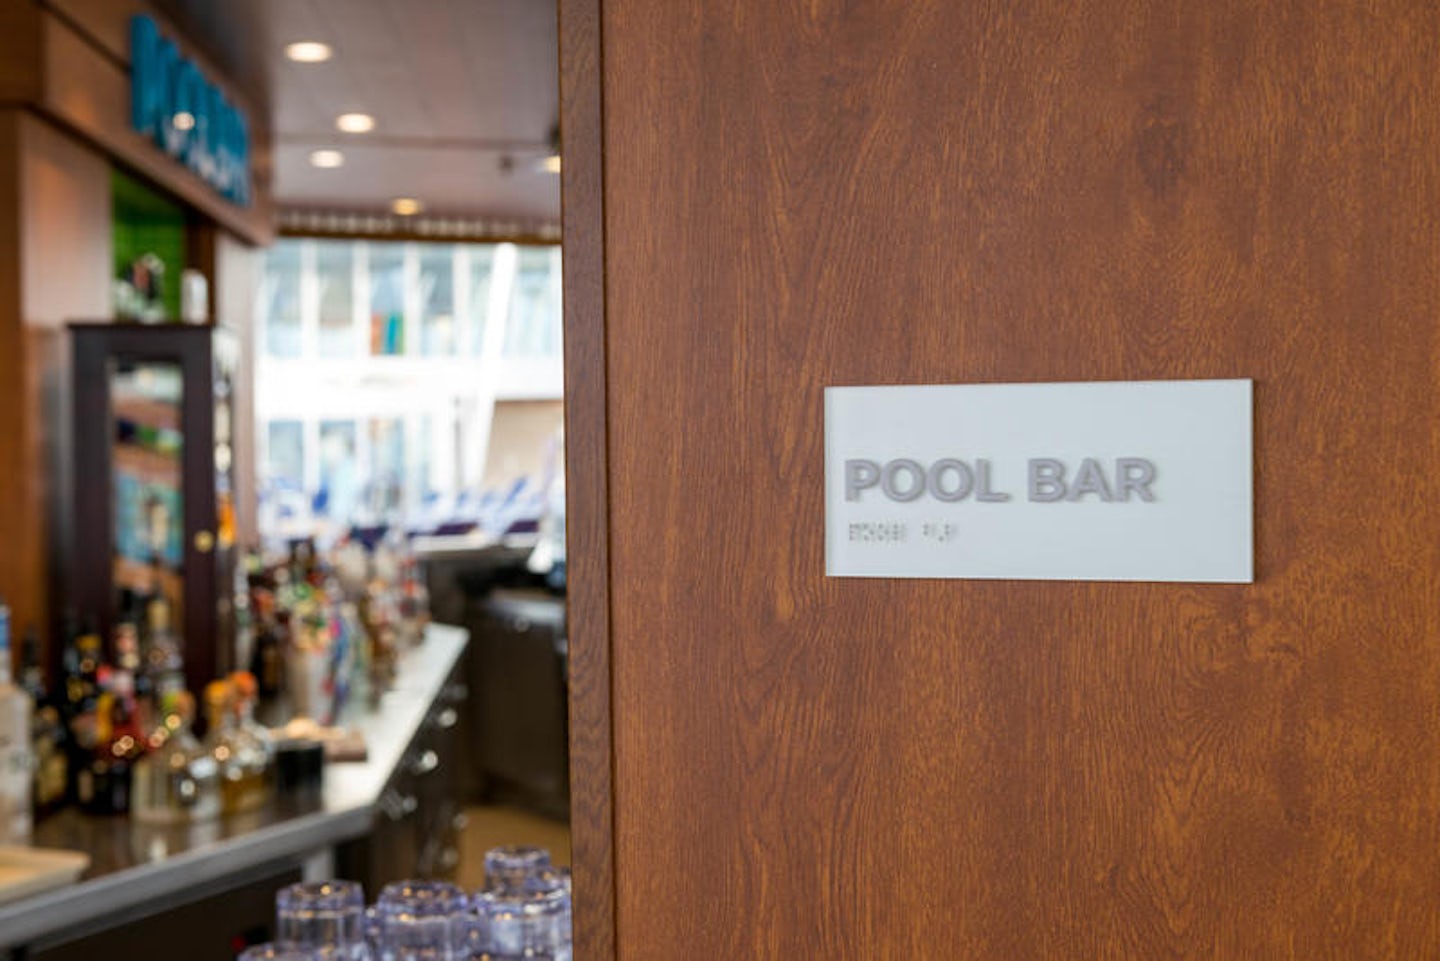 Pool Bar on Symphony of the Seas